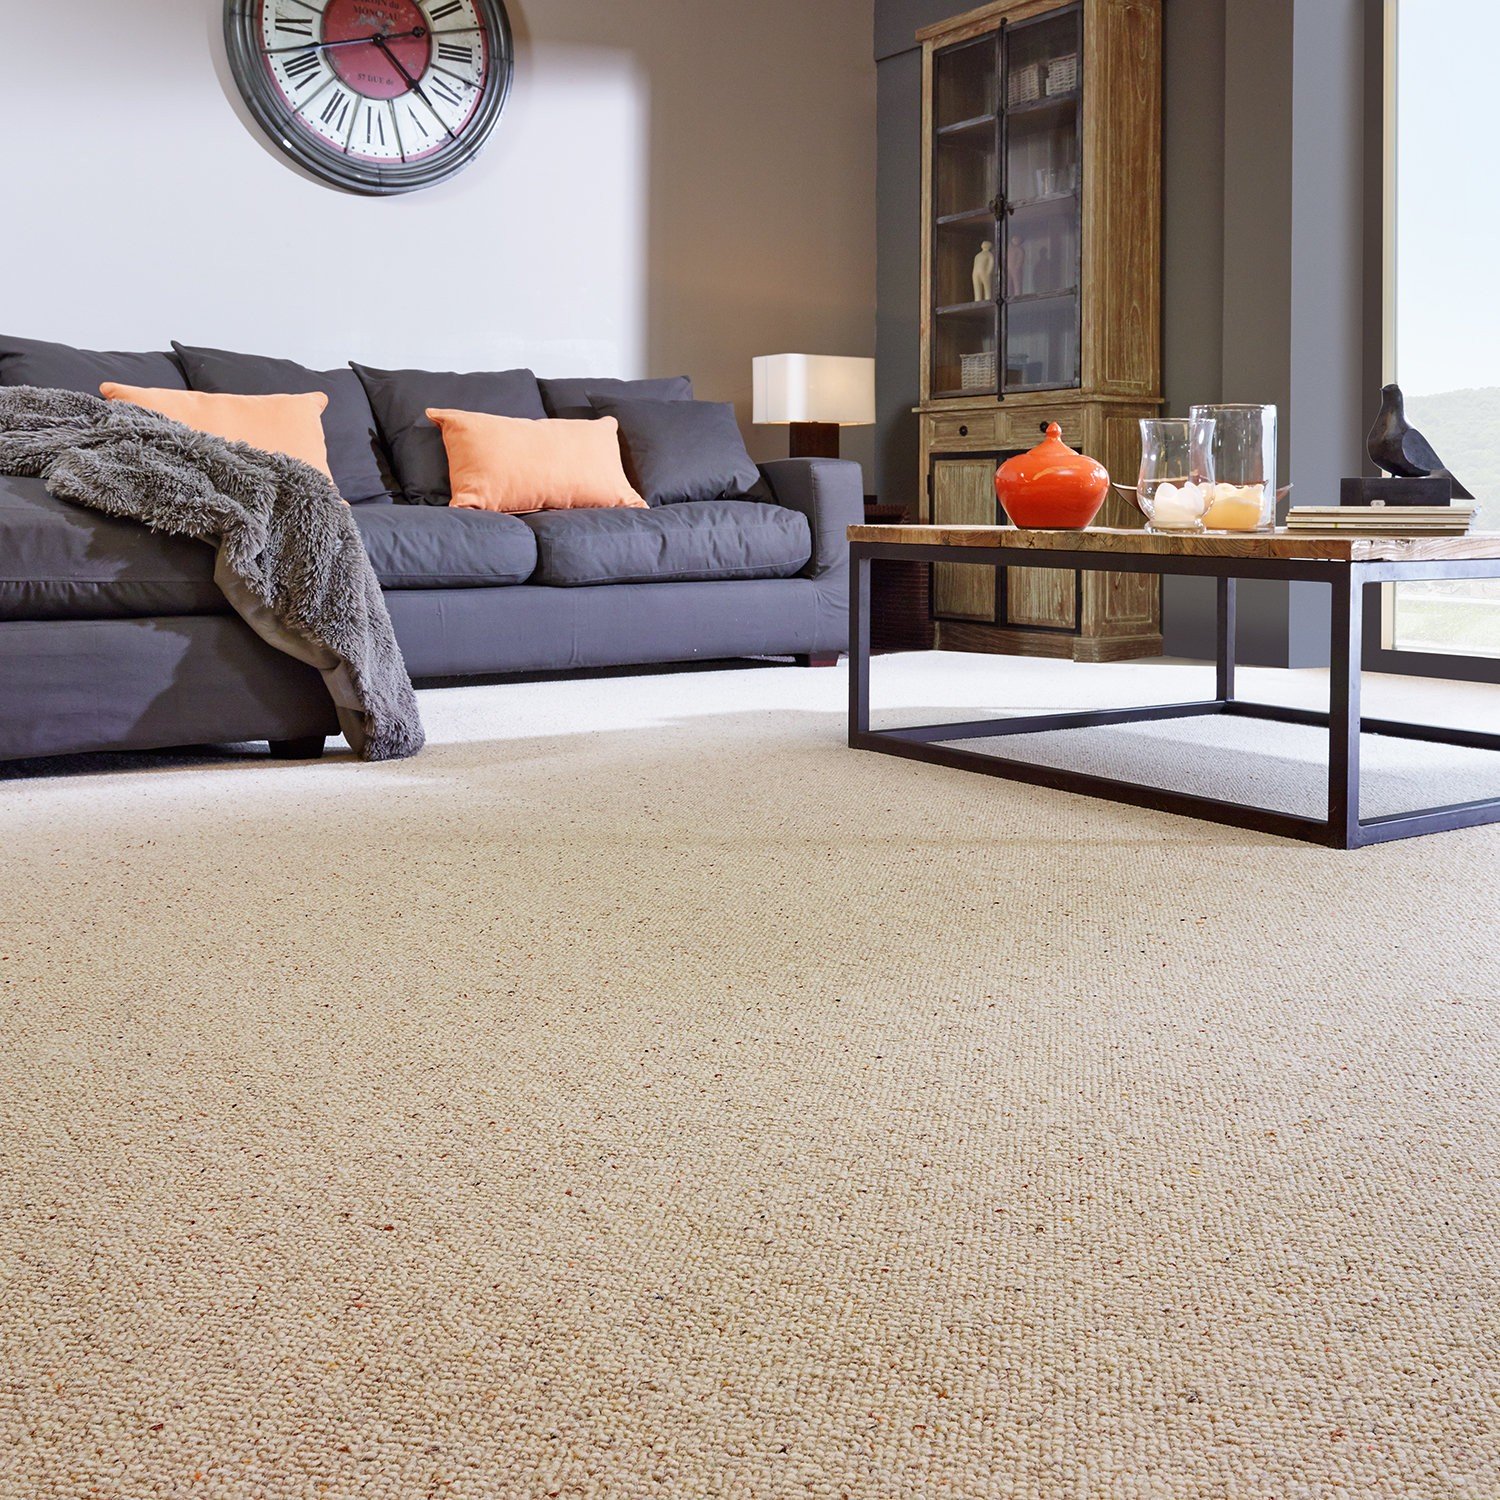 10 benefits of having carpet for living room - Hawk Haven